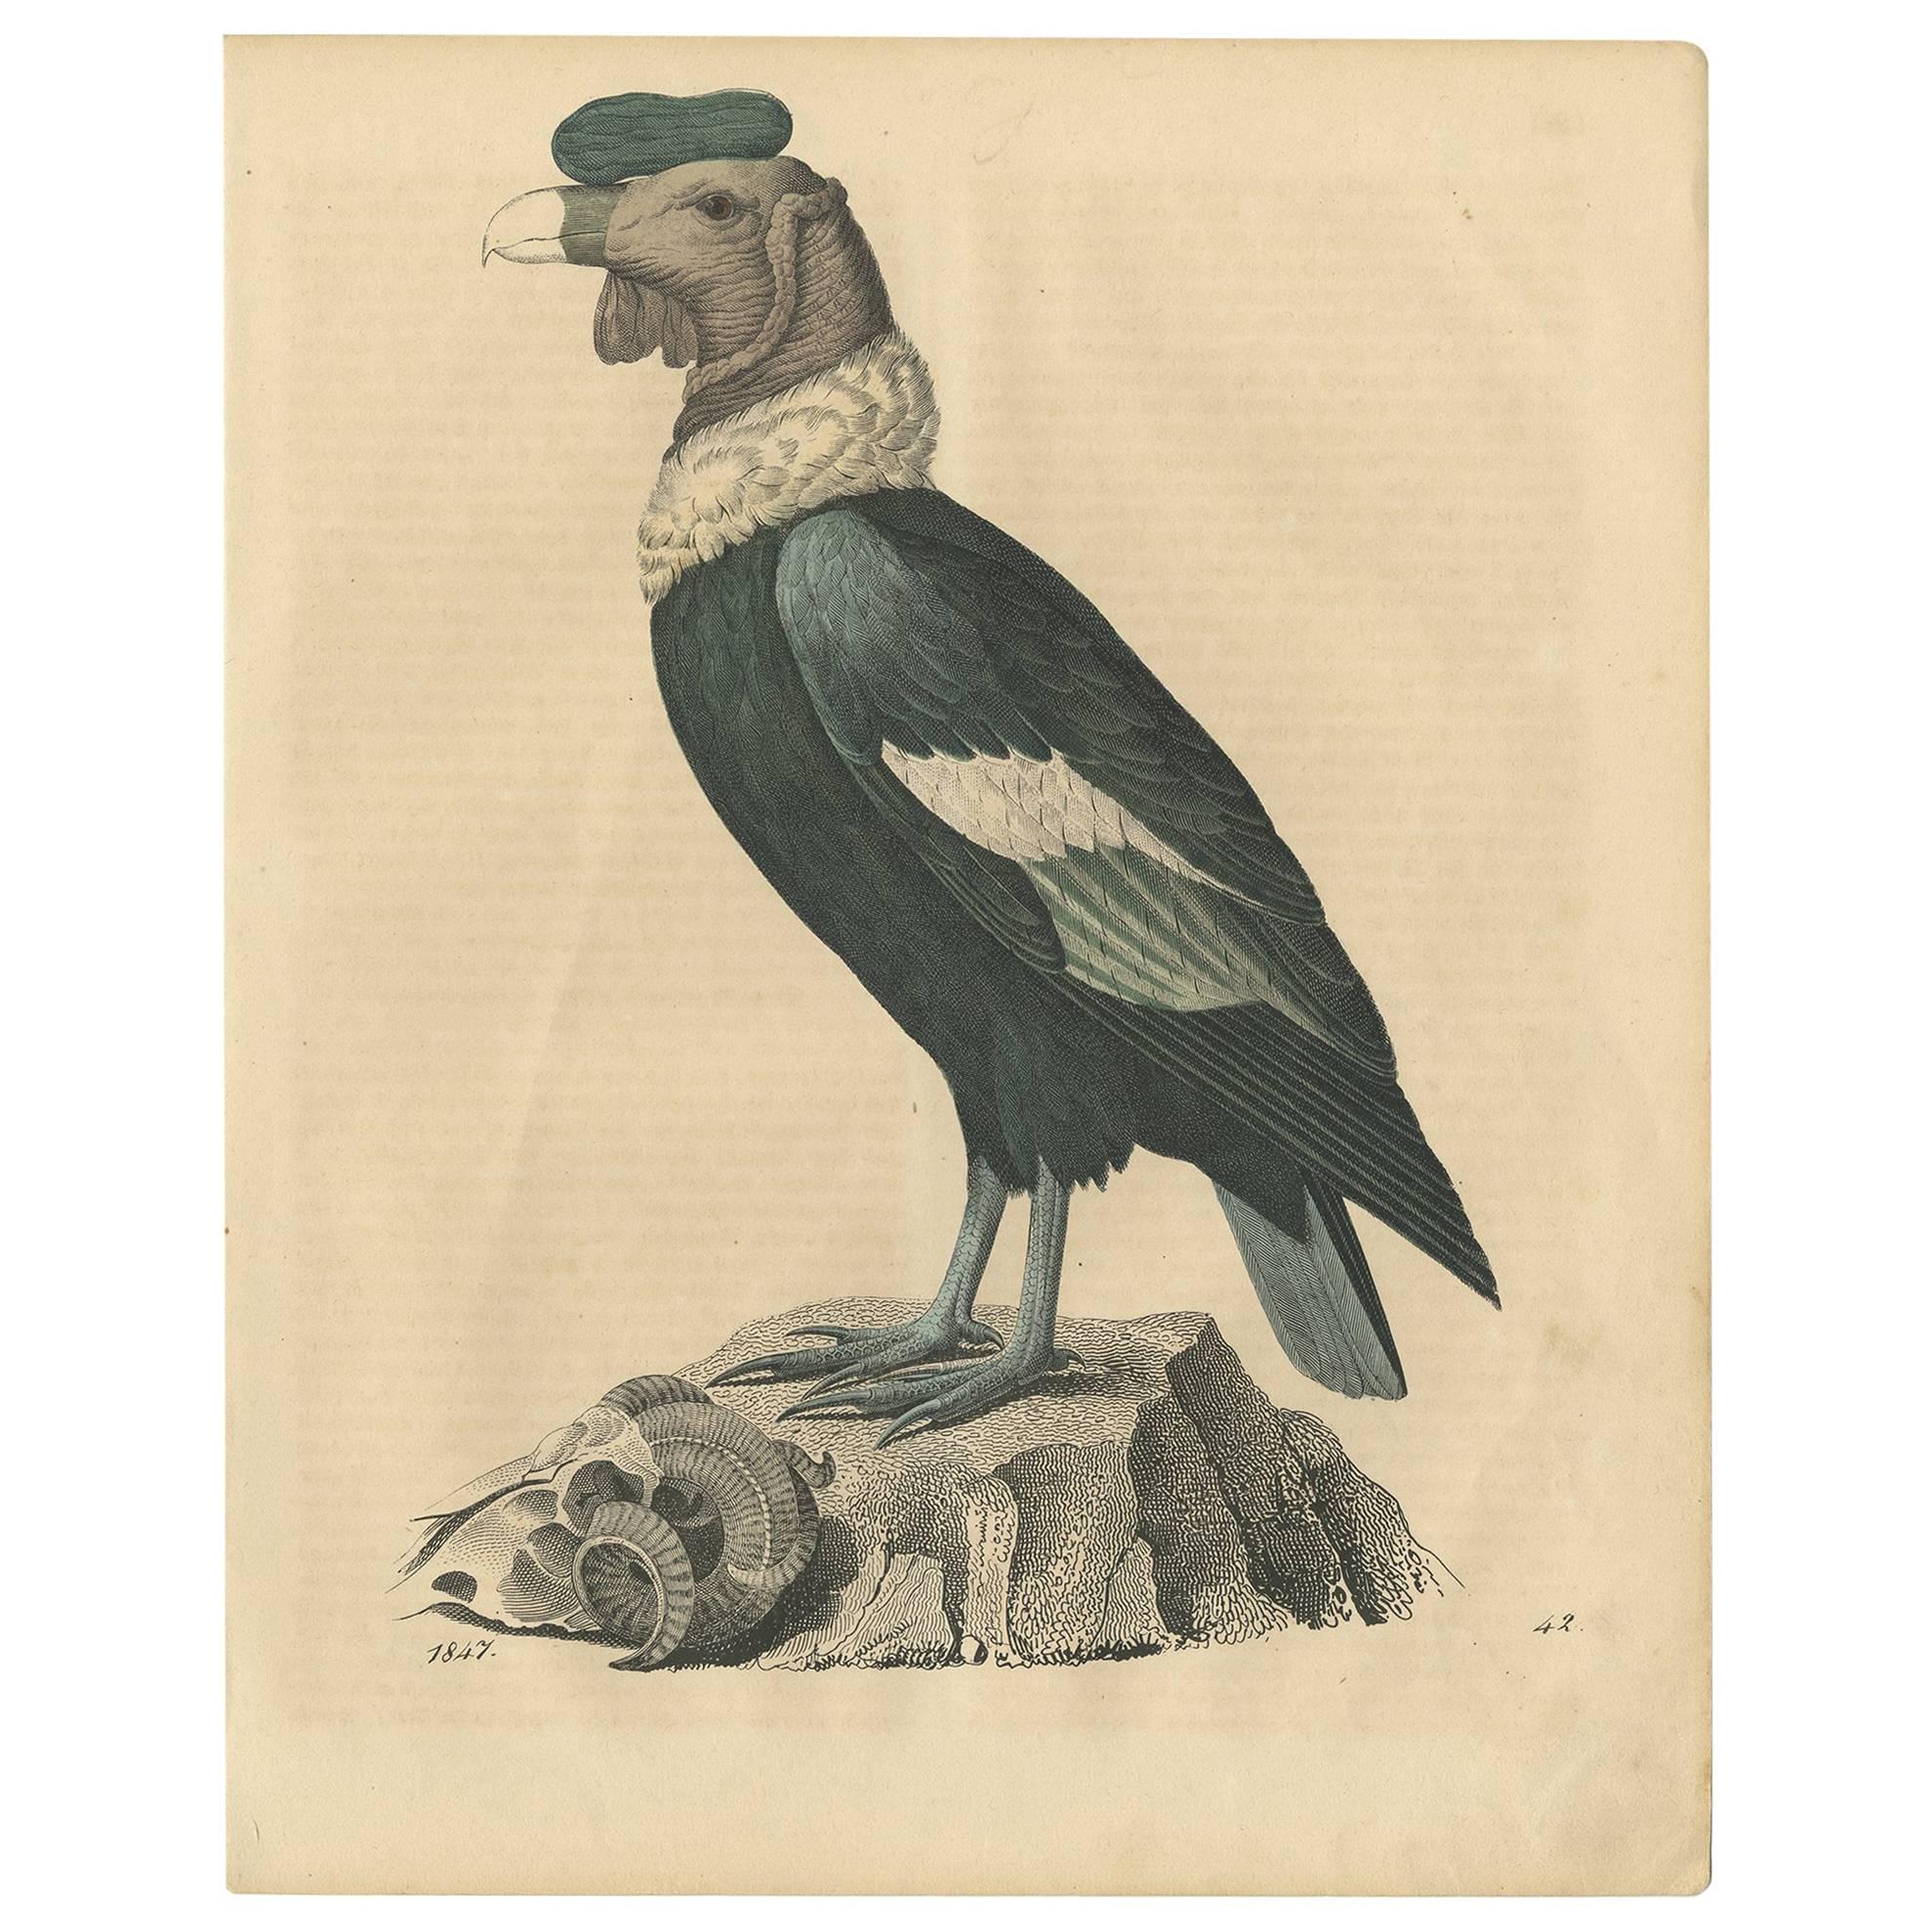 Antique Bird Print of a Condor 'Vulture' by C. Hoffmann, 1847